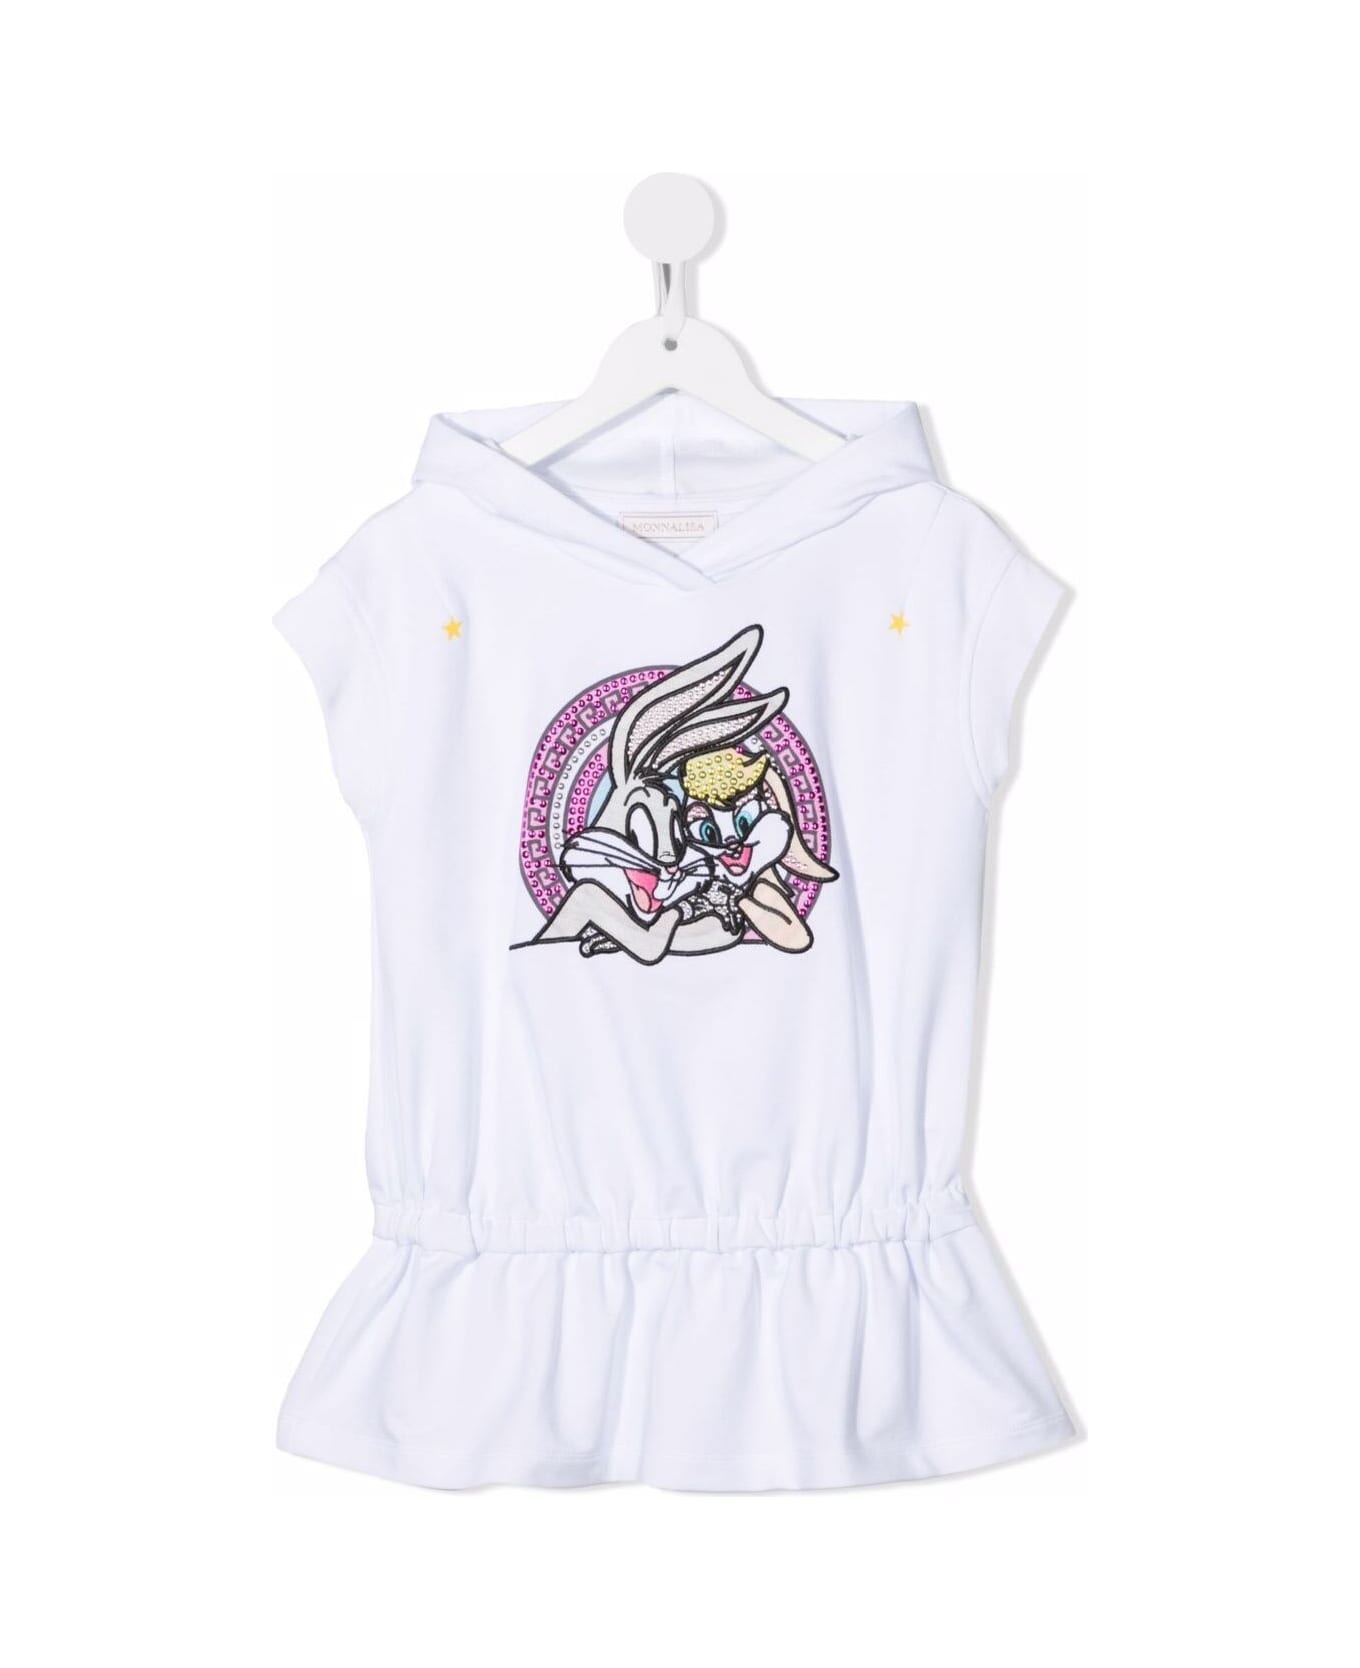 Monnalisa Kids Girl's White Jersey Dress With Lola And Bunny Logo - White